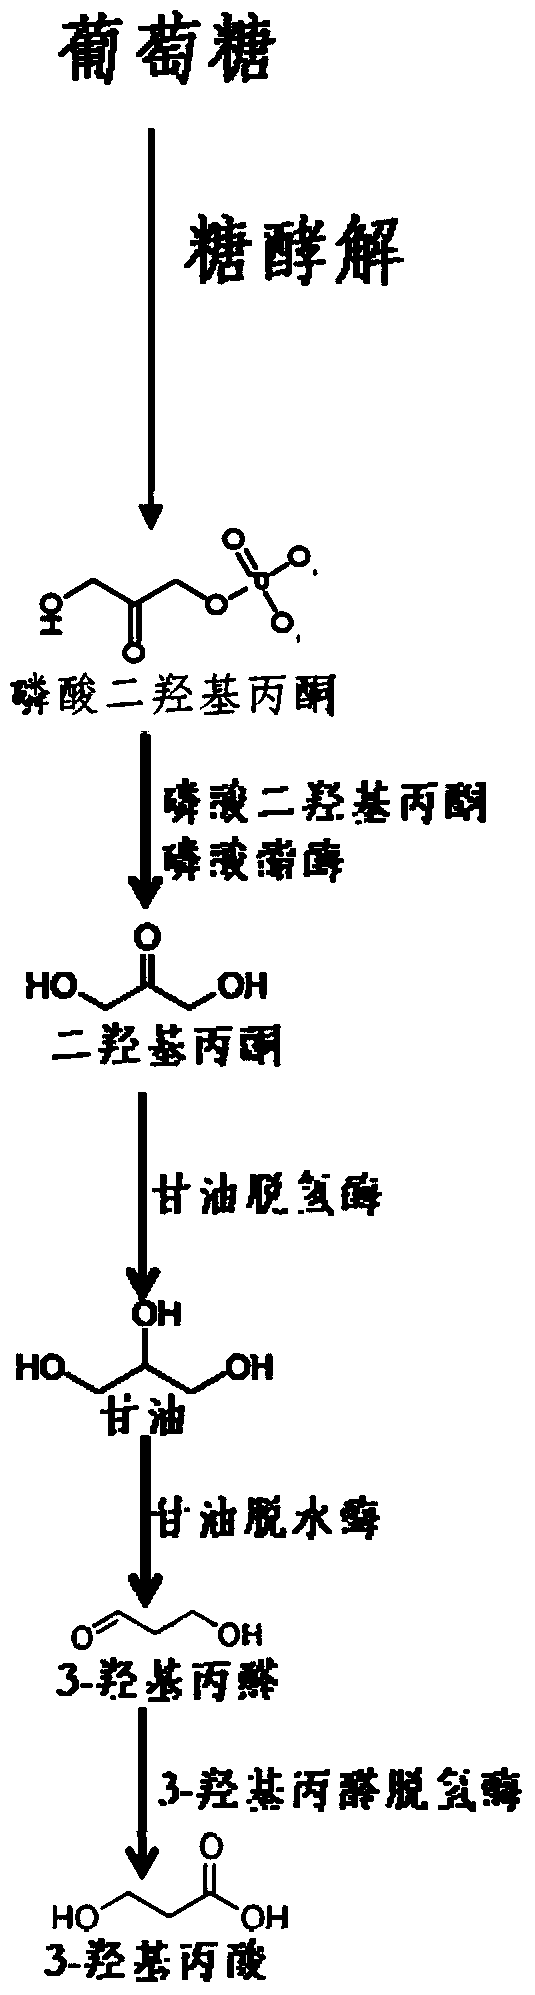 Recombinant Corynebacterium glutamicum producing 3-hydroxypropionic acid, its construction method and application